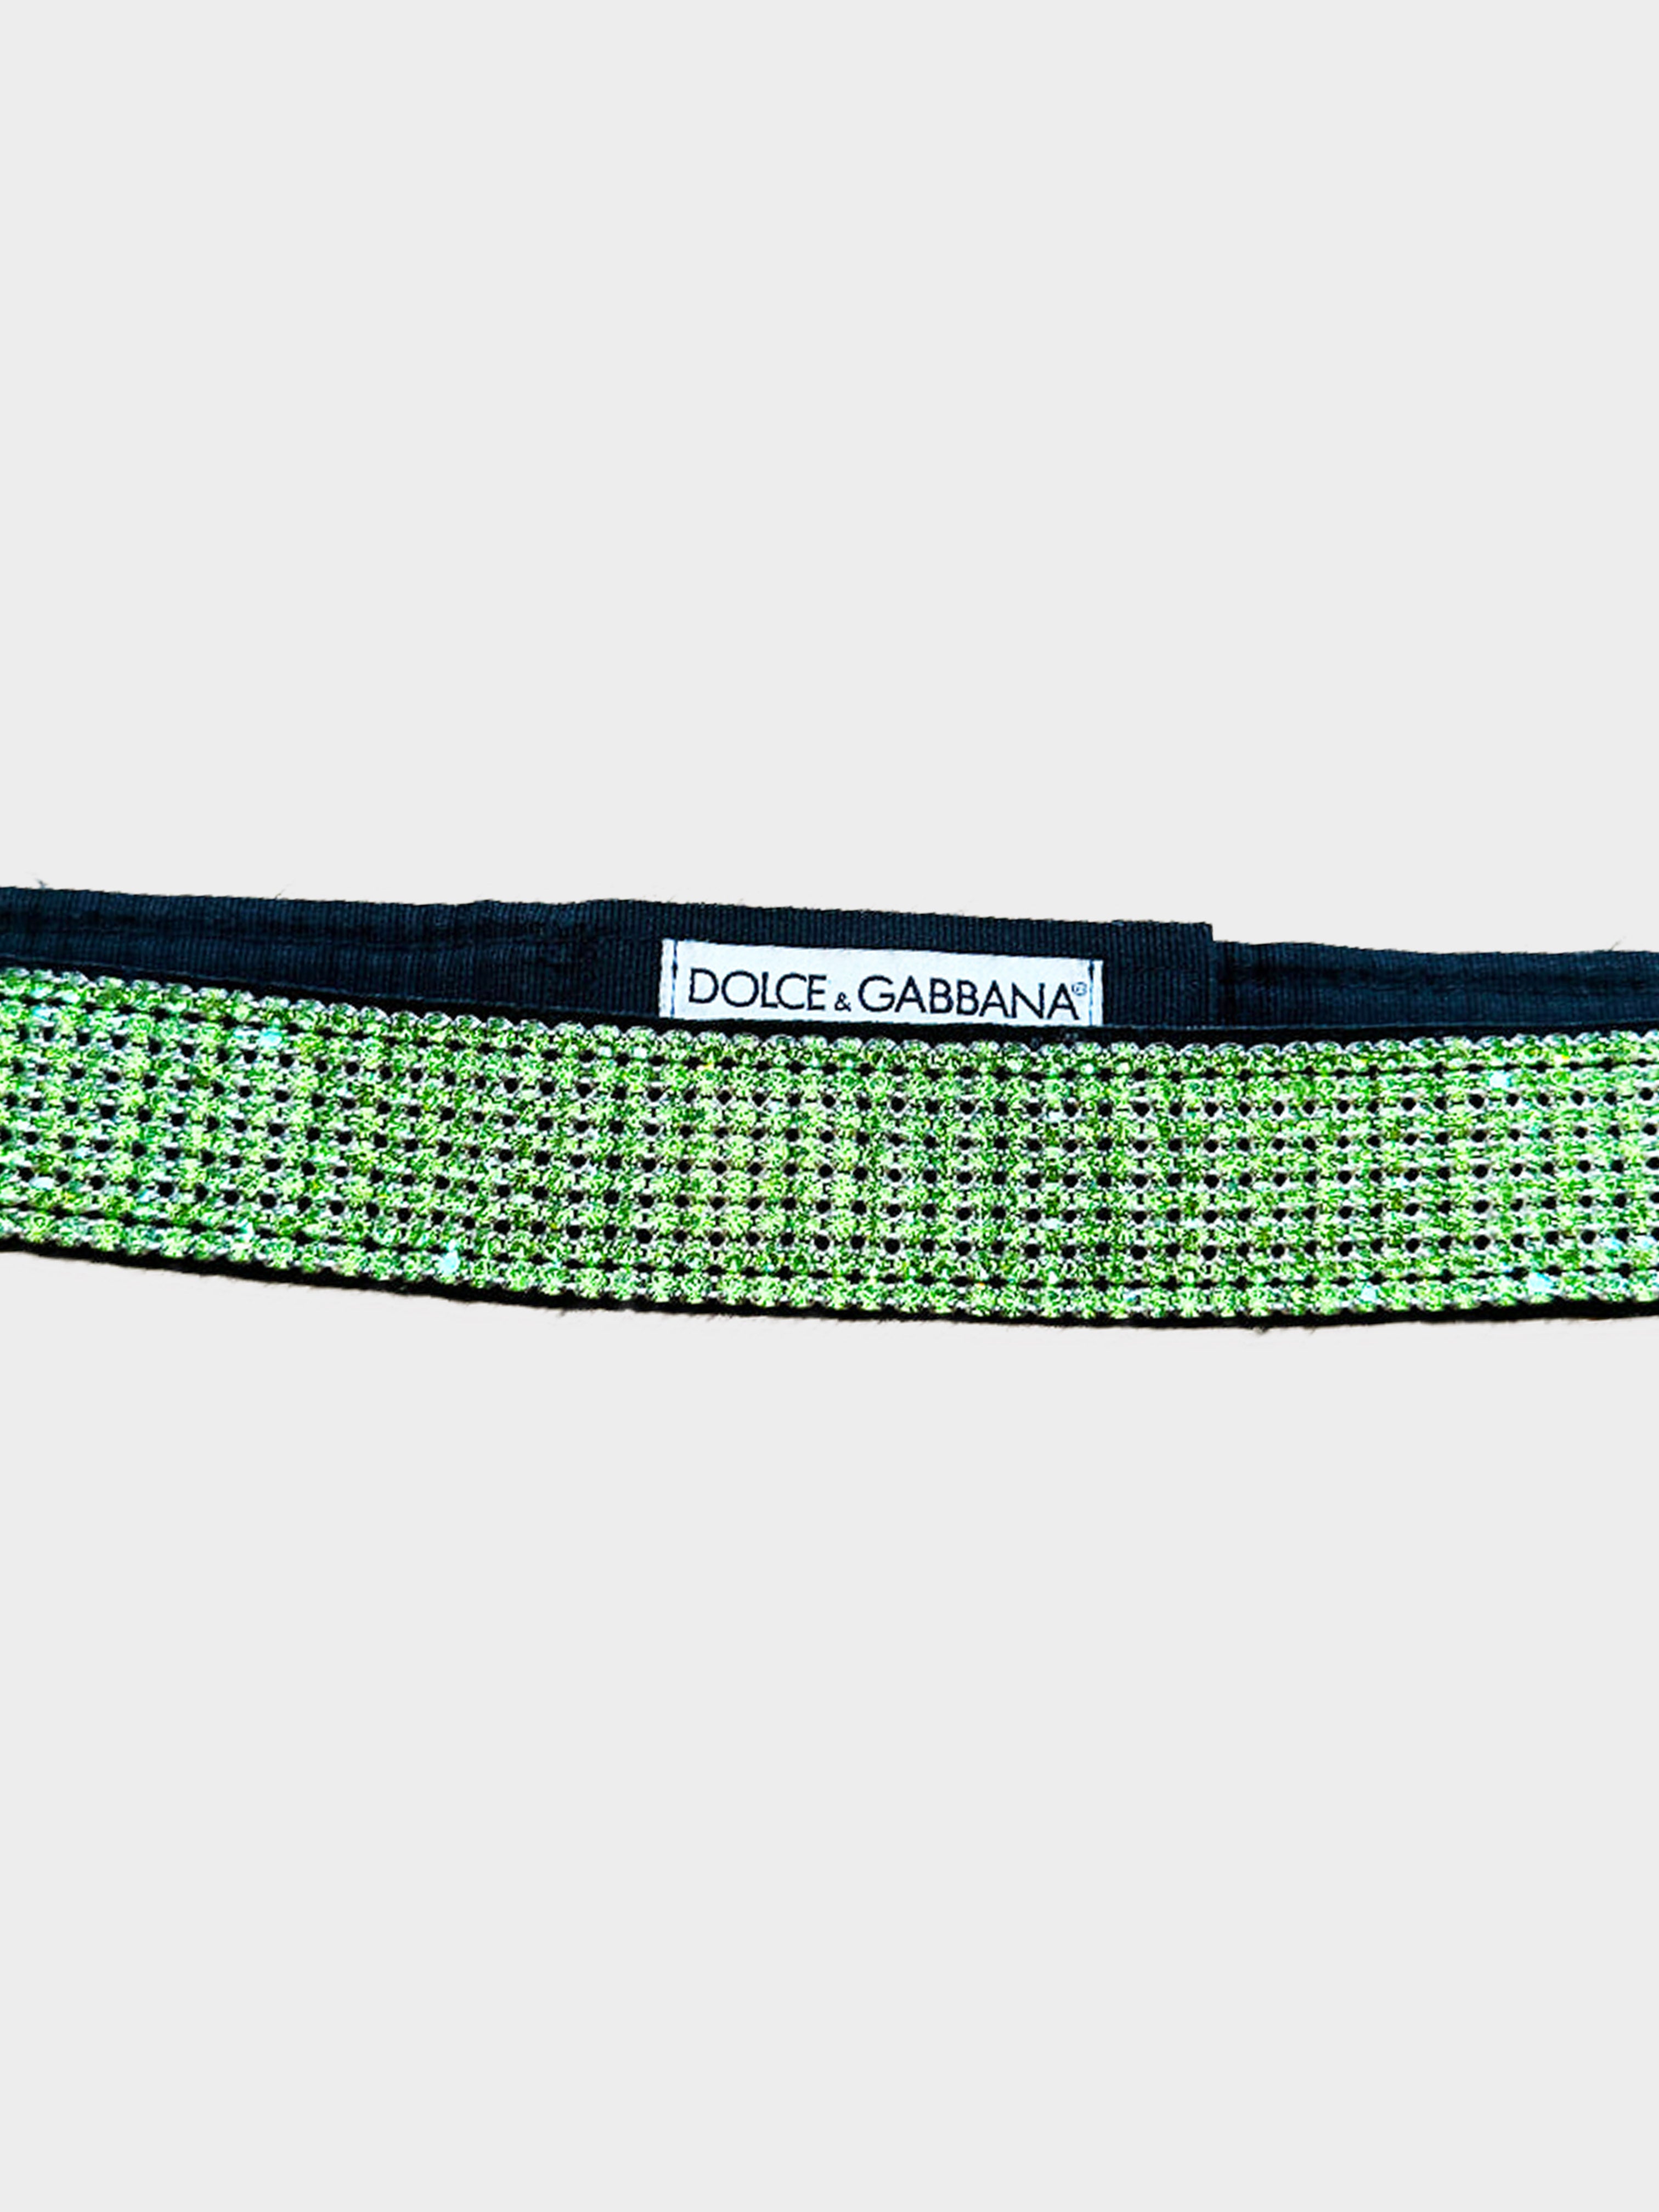 Dolce and Gabbana SS 2000 Green Swarovski Belt